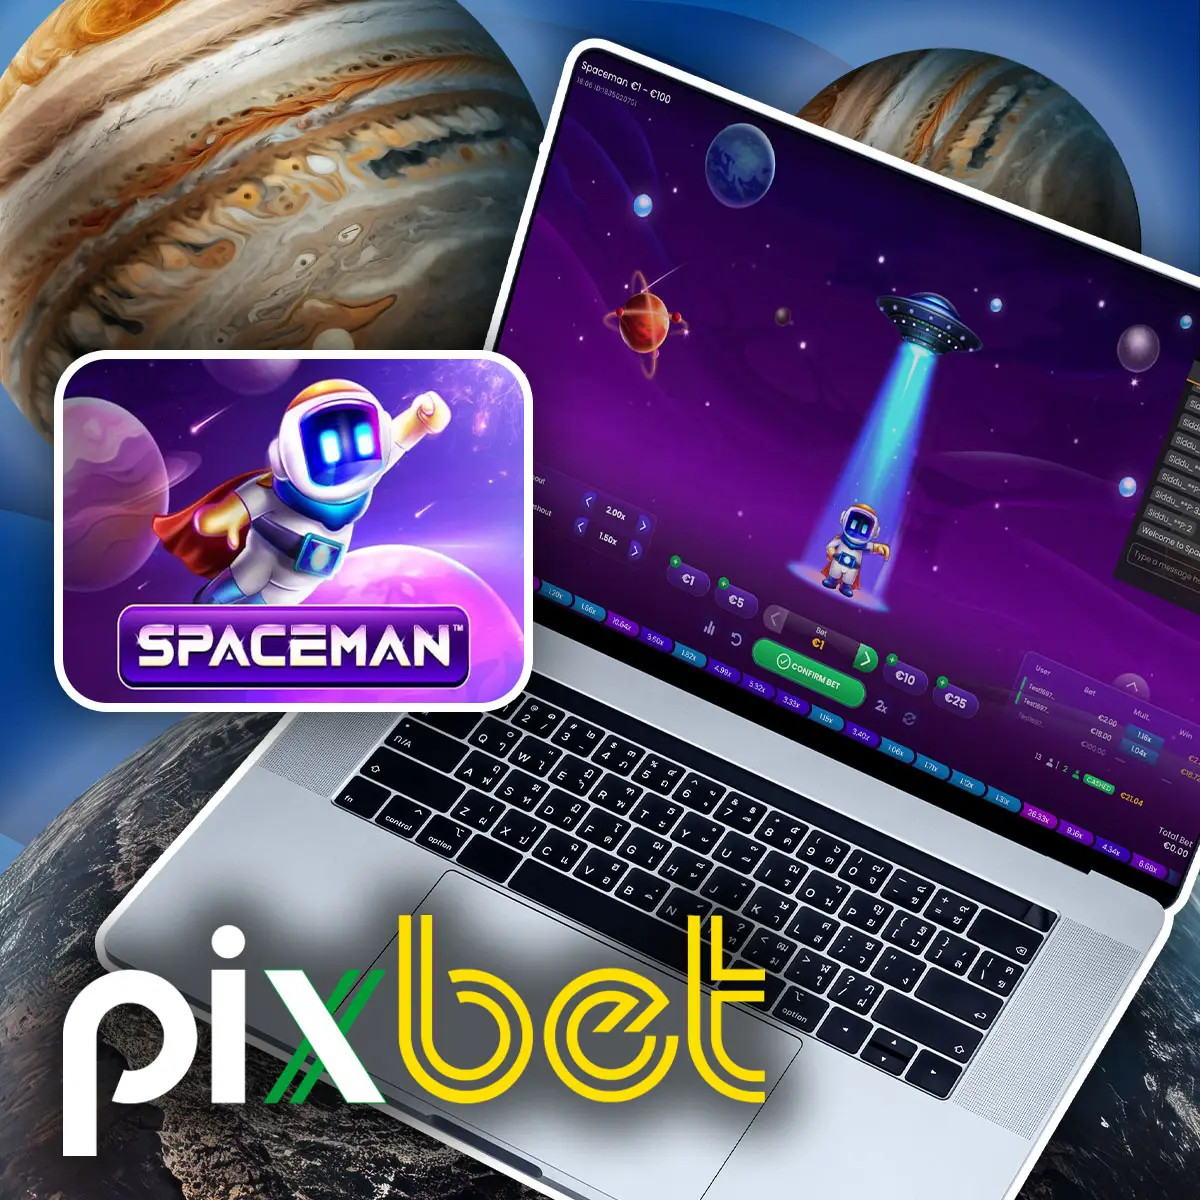 Análise completa das regras de jogo do Pixbet Spaceman no Brasil